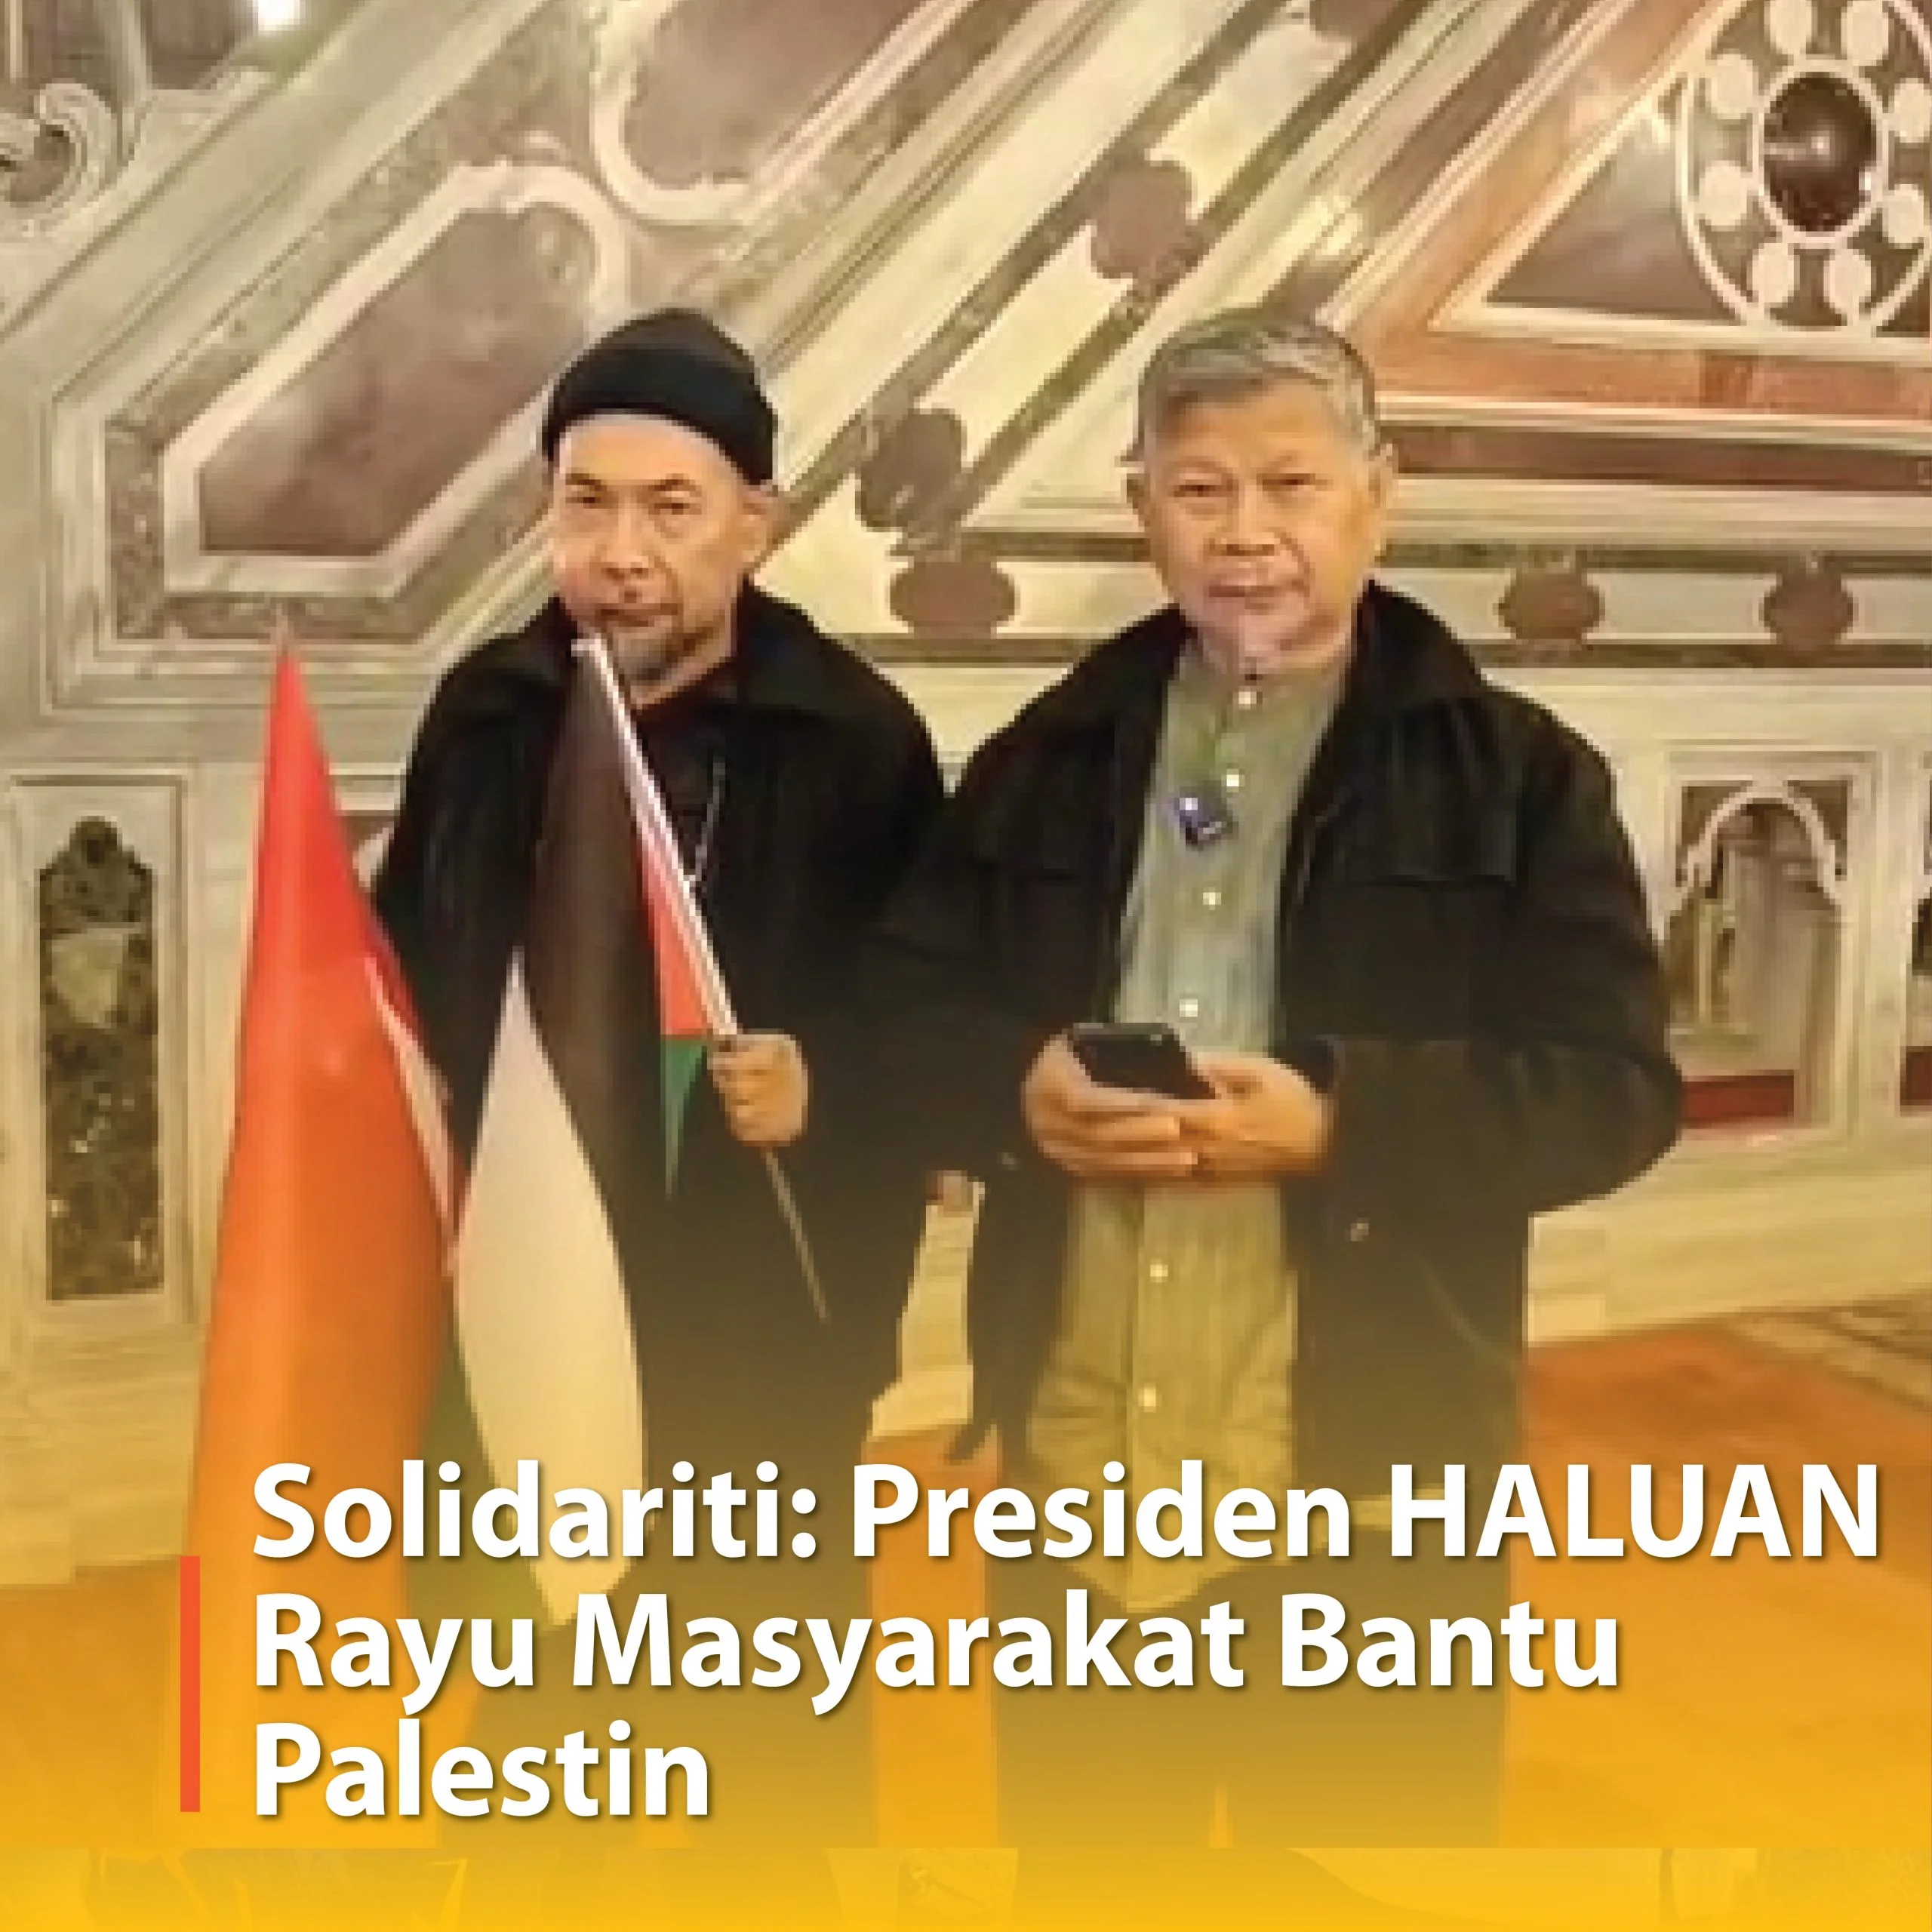 Solidariti: Presiden HALUAN Rayu Masyarakat Bantu Palestin